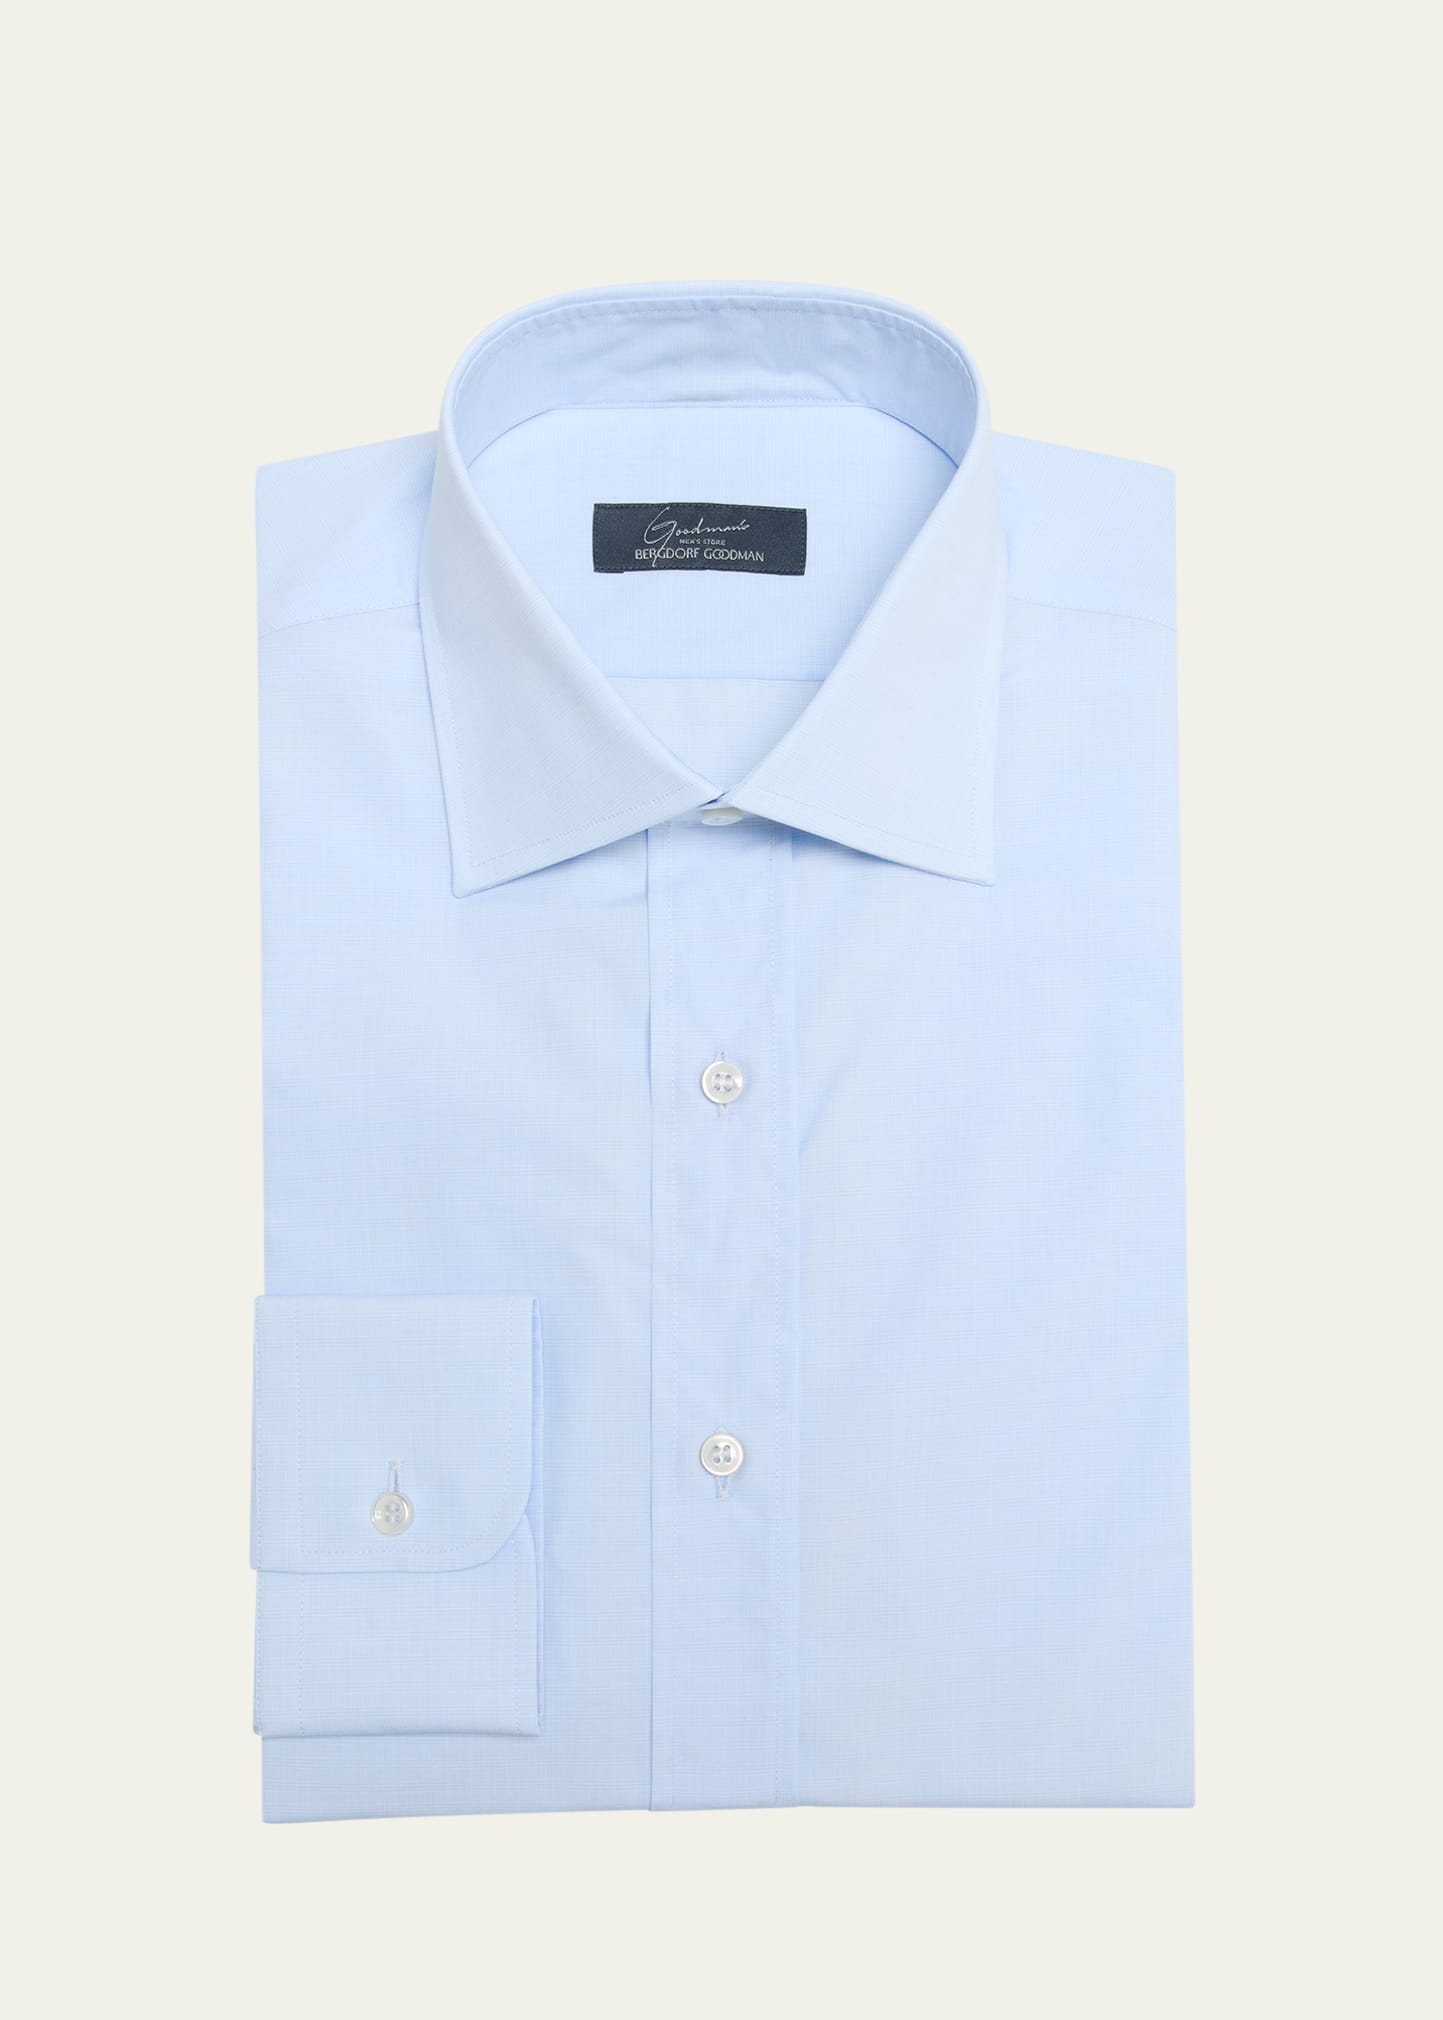 Men's Micro-Plaid Cotton Dress Shirt